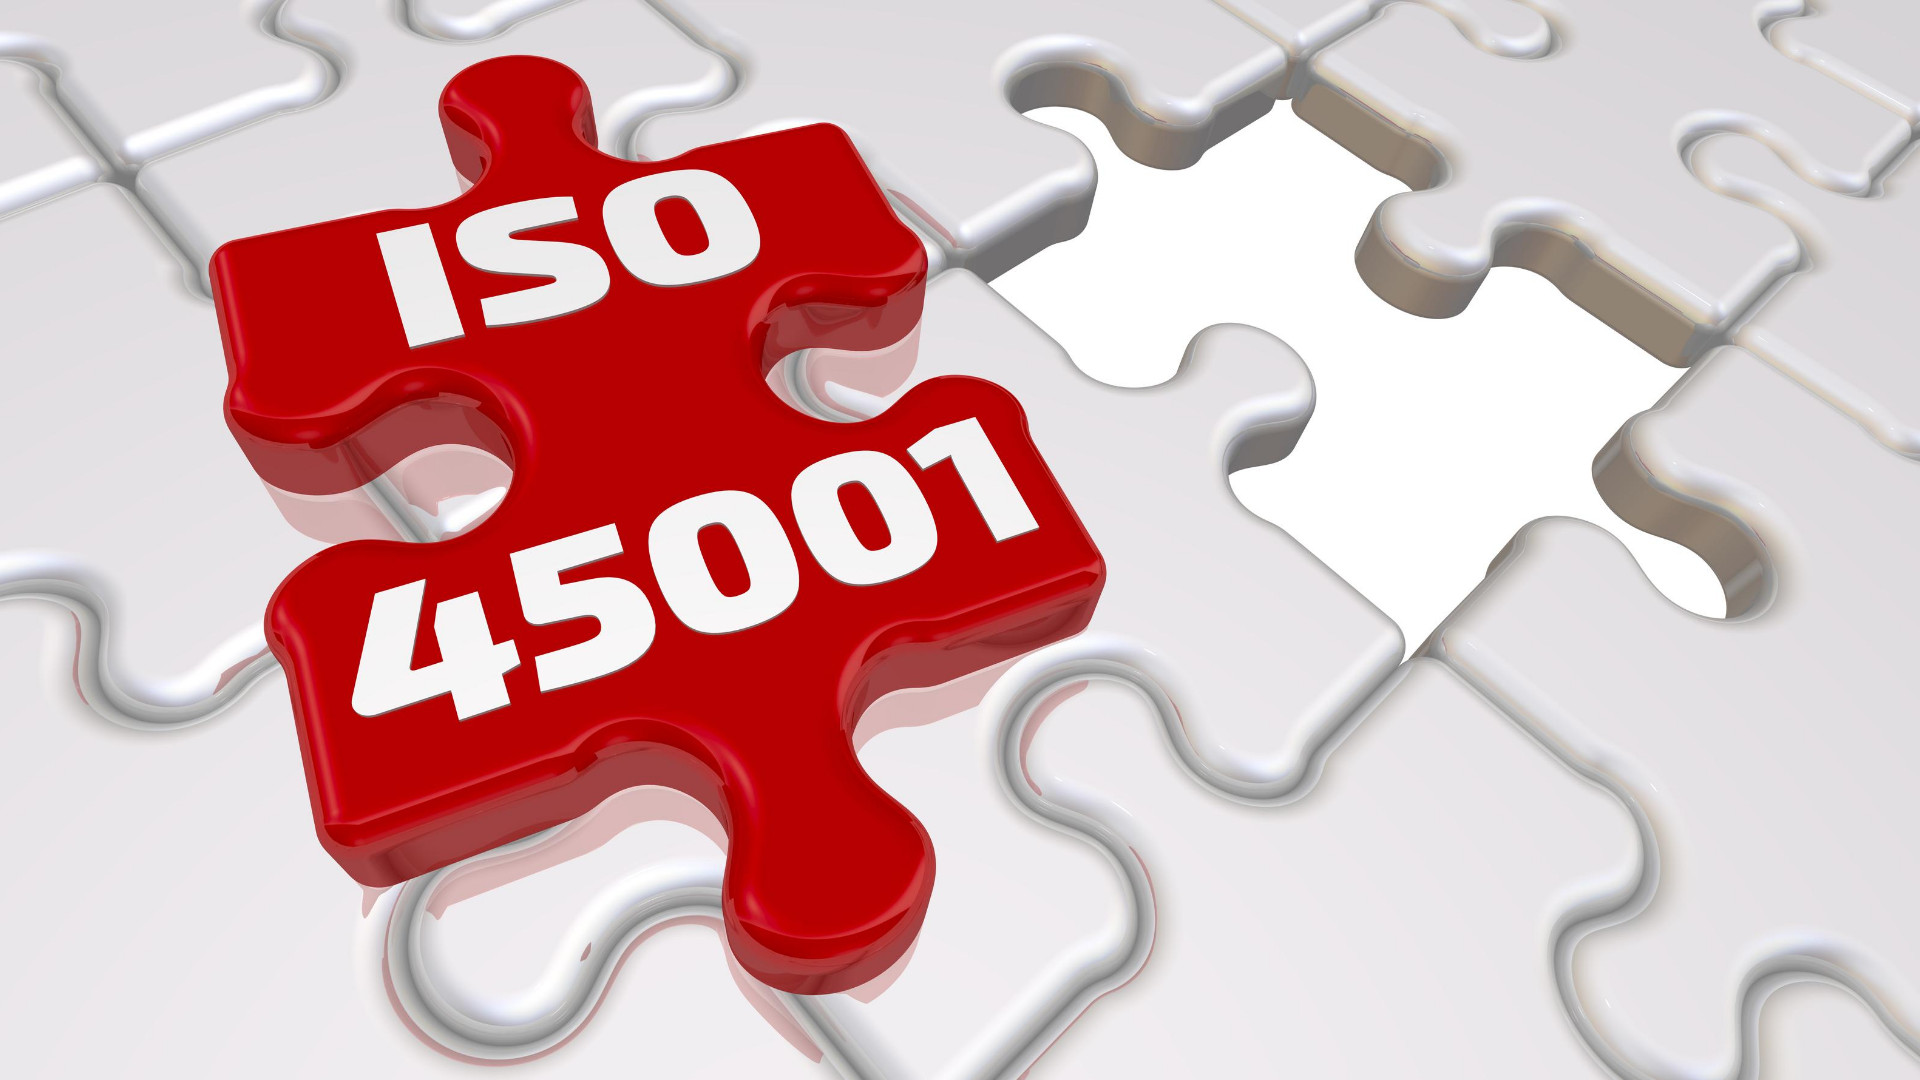 Certificatore ISO 45001